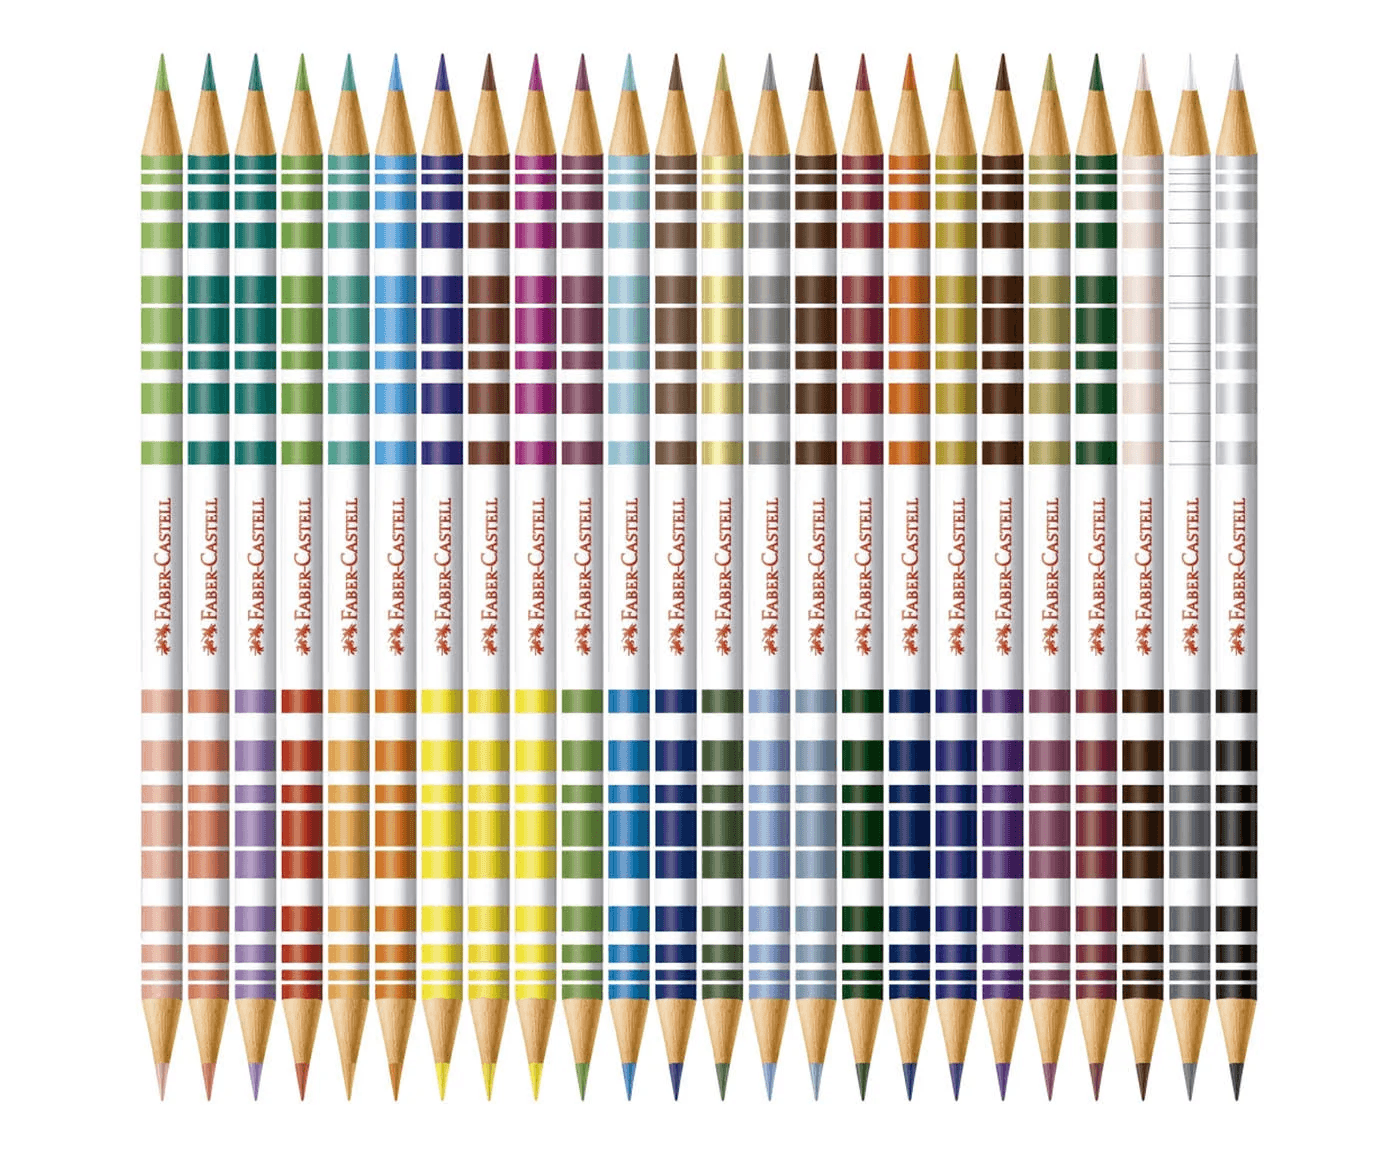 Lápis de Cor Ecolápis Bicolor 24 Lápis/48 Cores Faber Castell